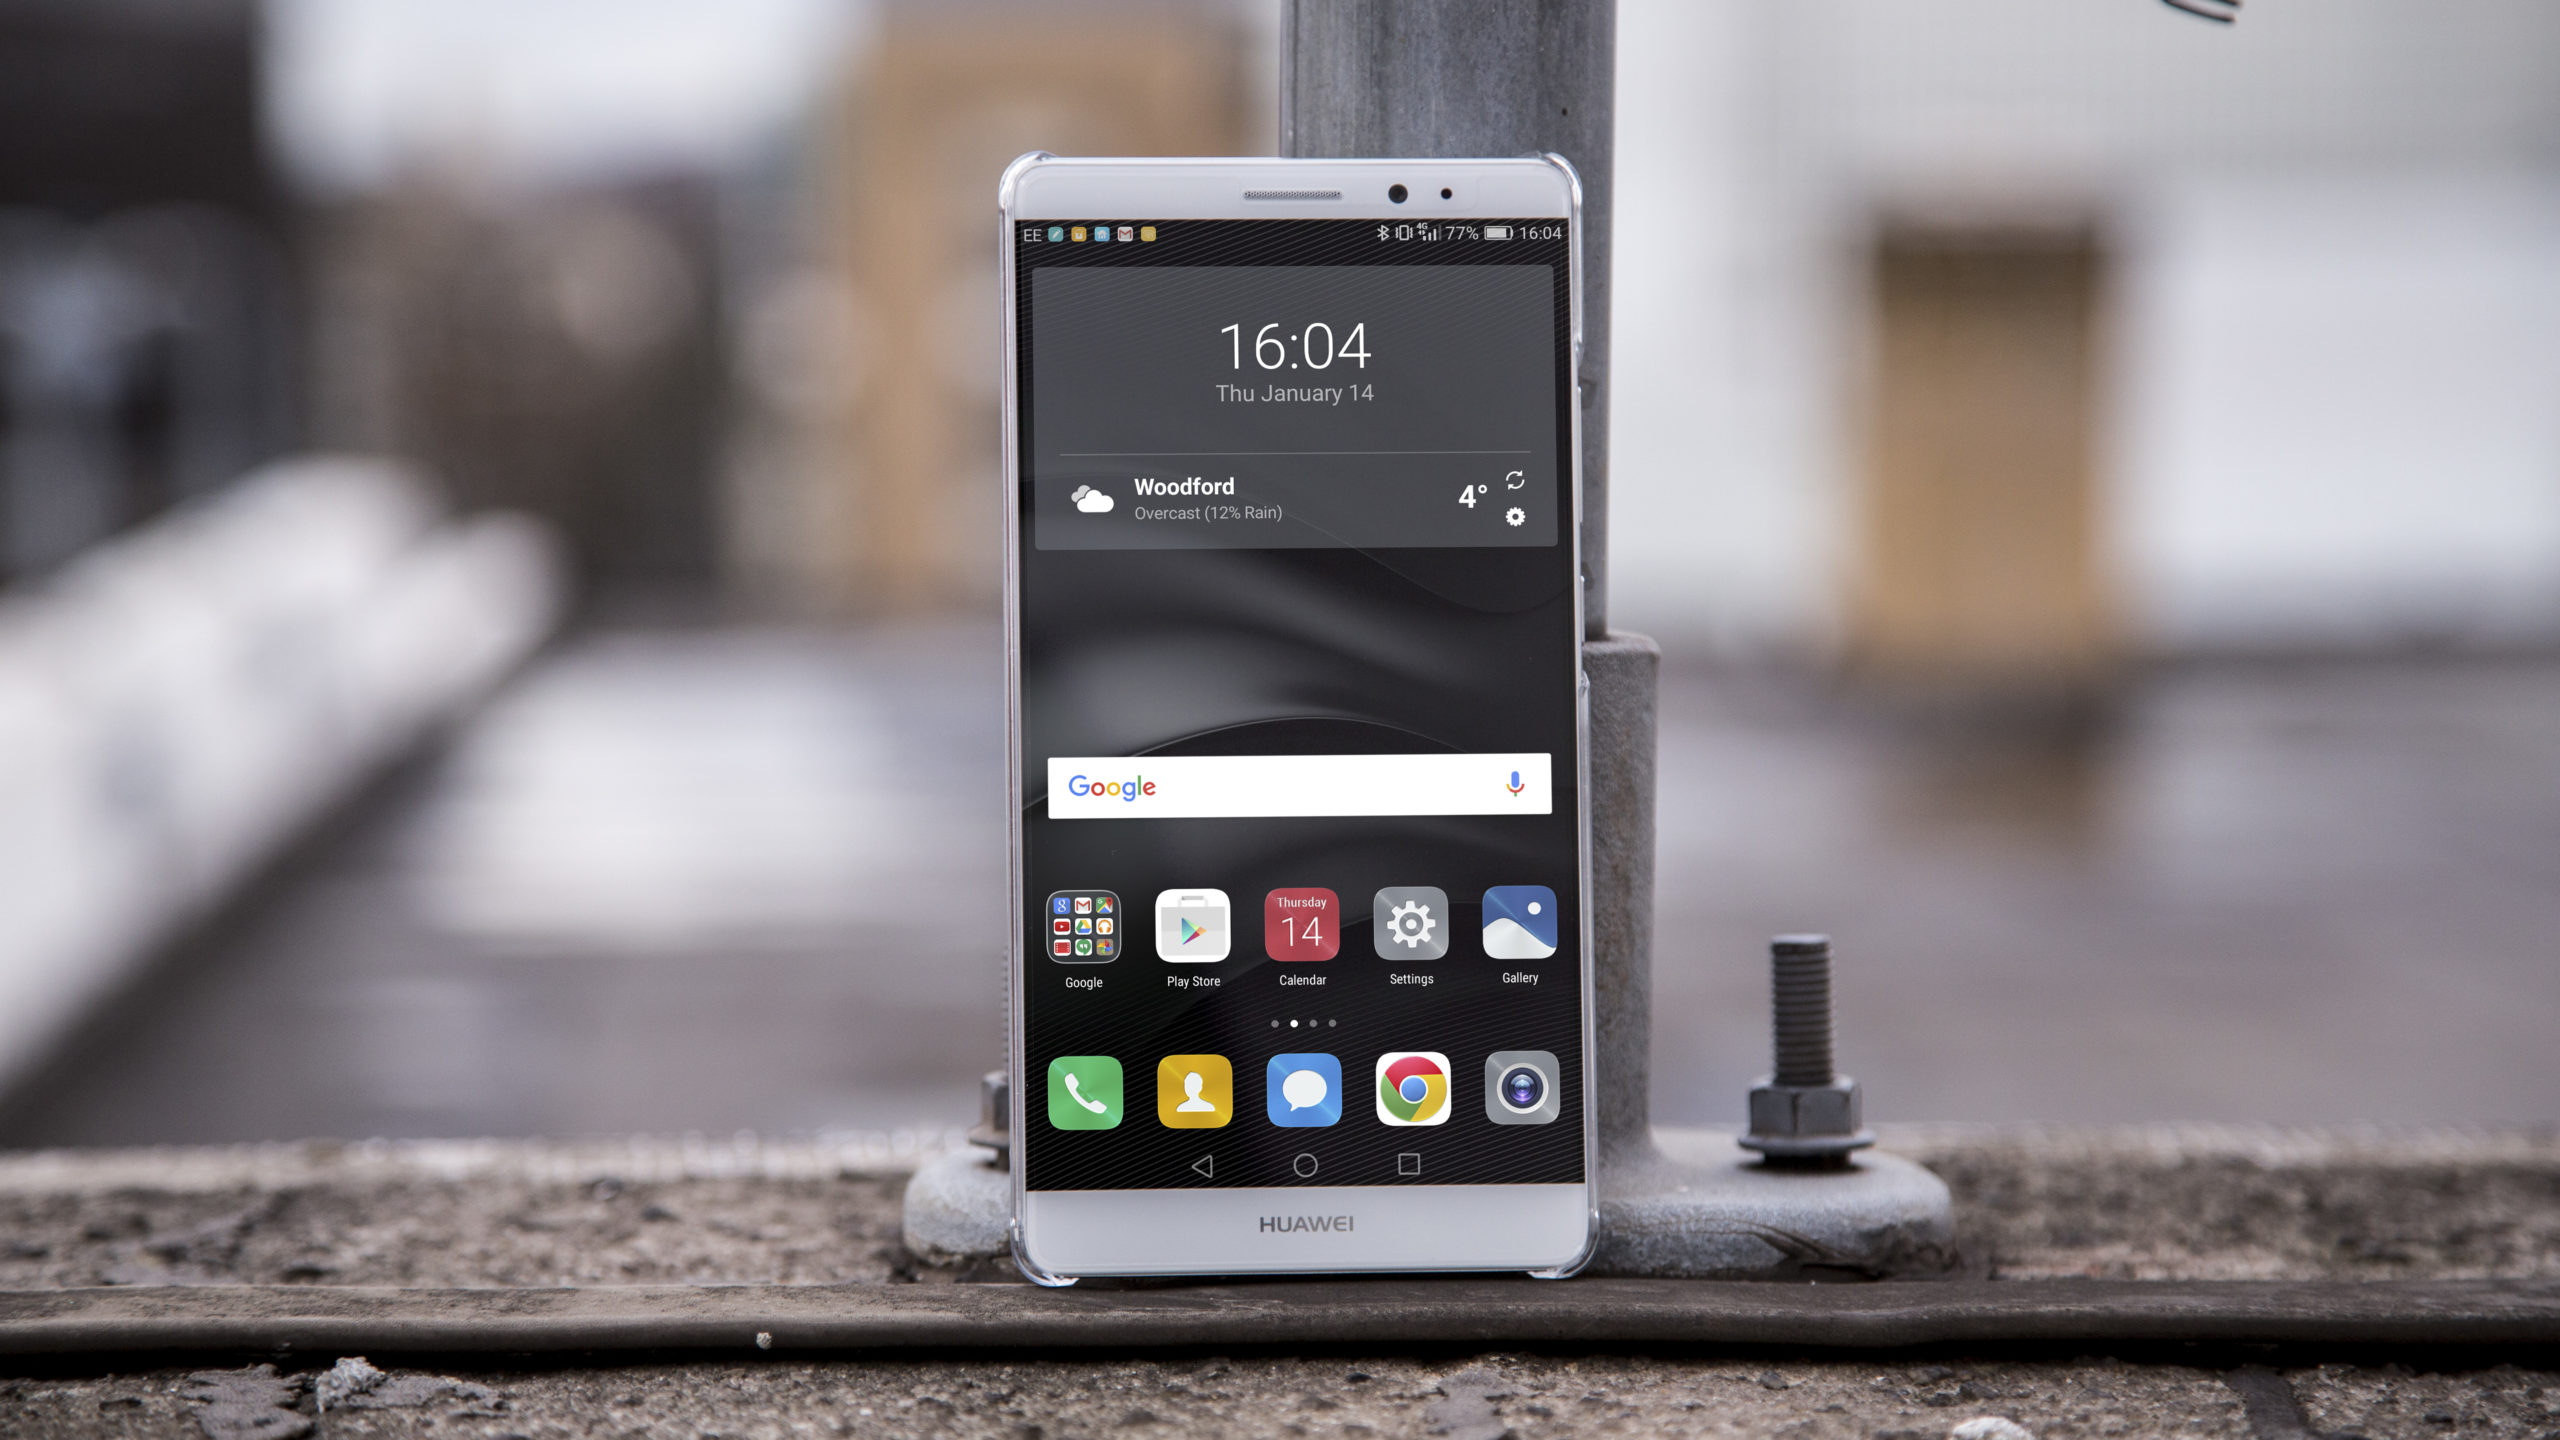 Zeebrasem Alternatief scheren Huawei Mate 8 review: A big phone that's almost brilliant